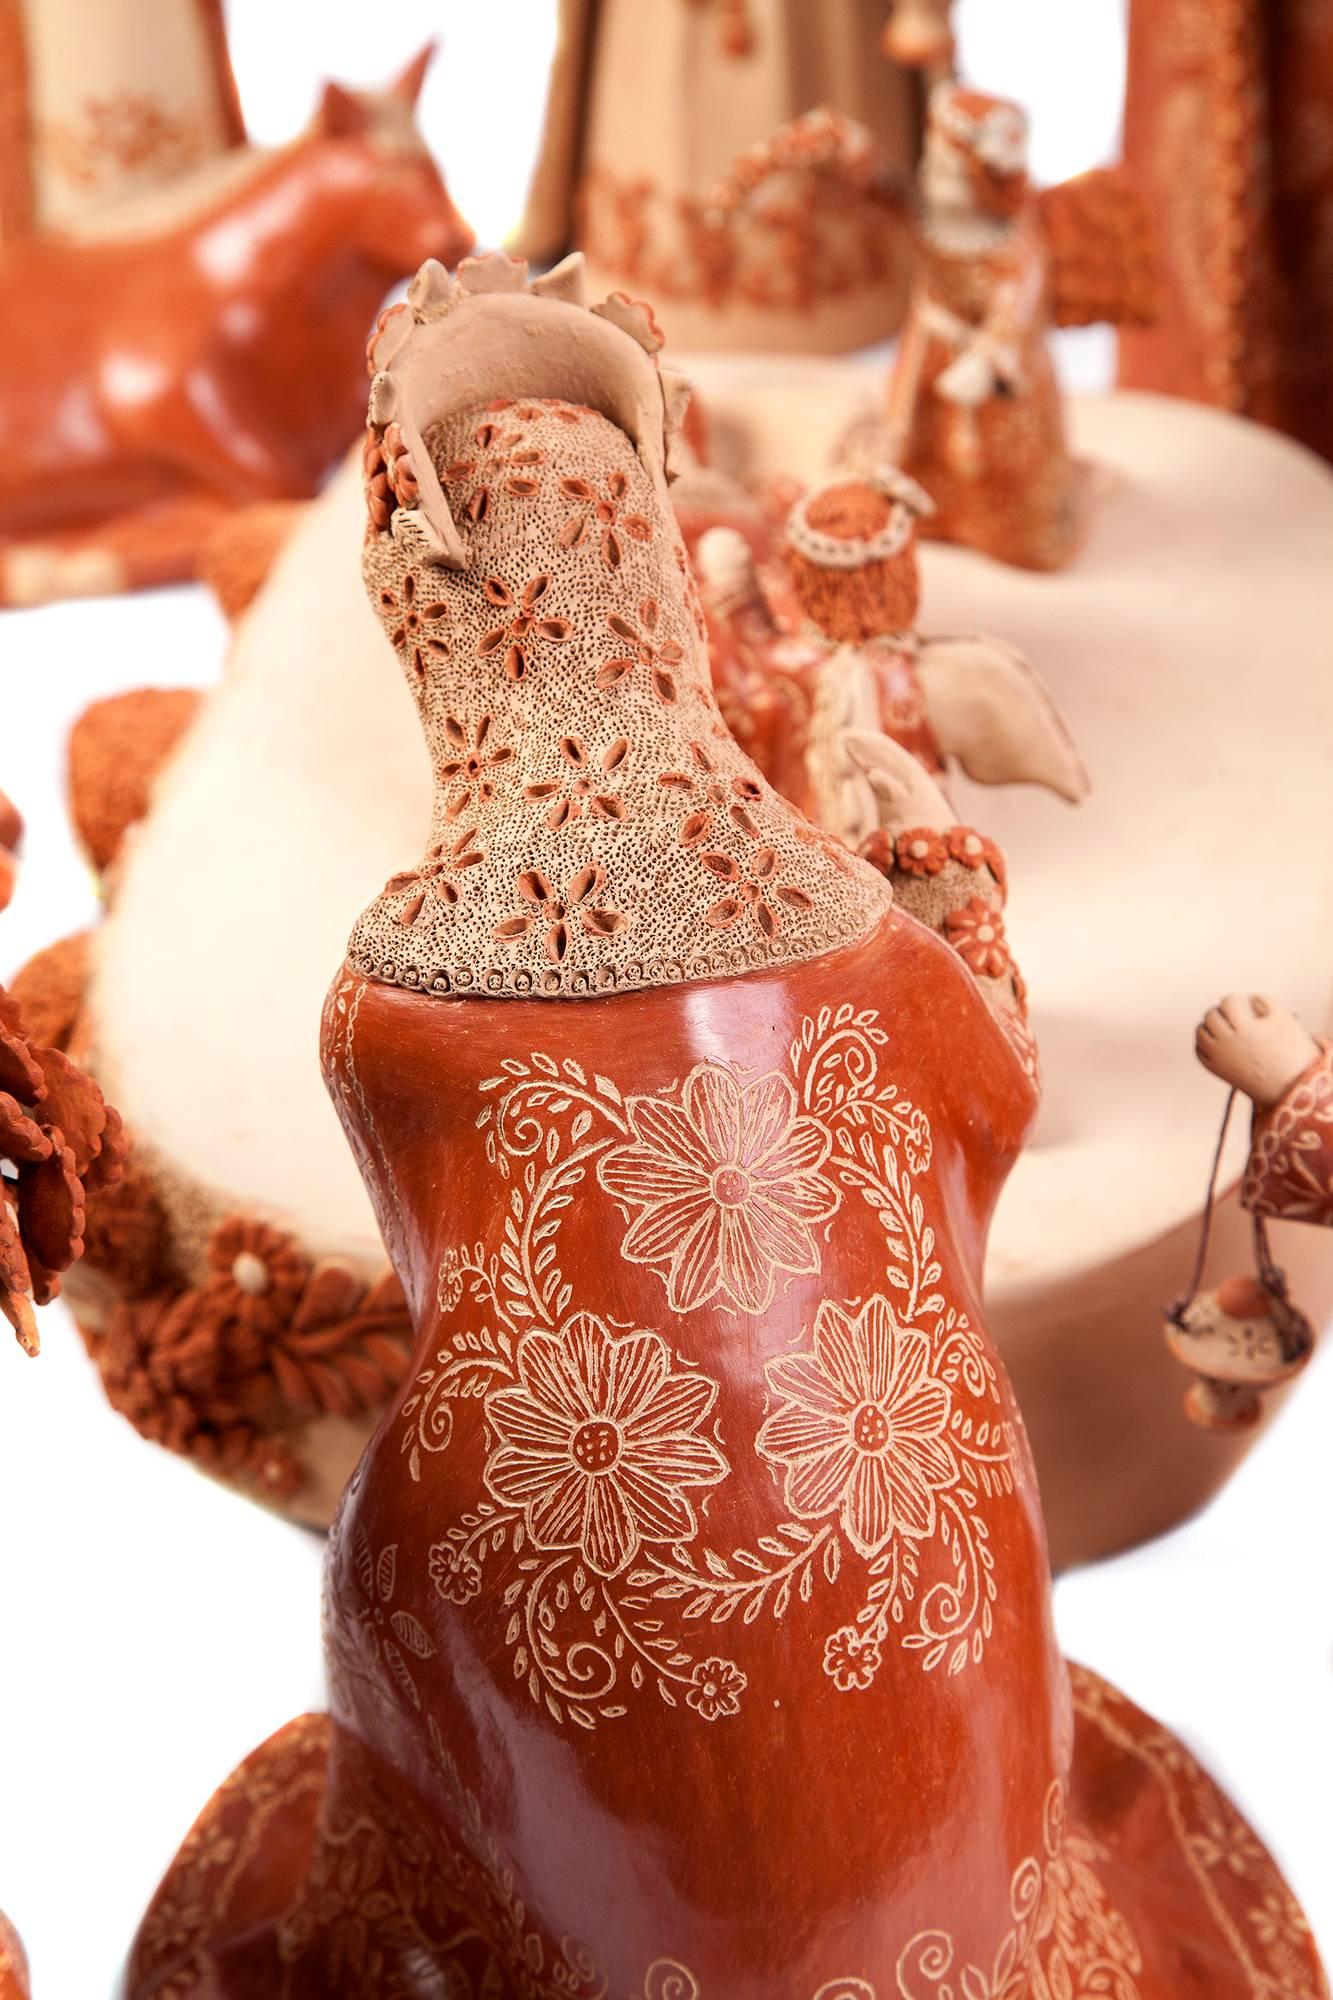 Nacimiento de Barro / Ceramics Mexican Folk Art Clay Nativity 6